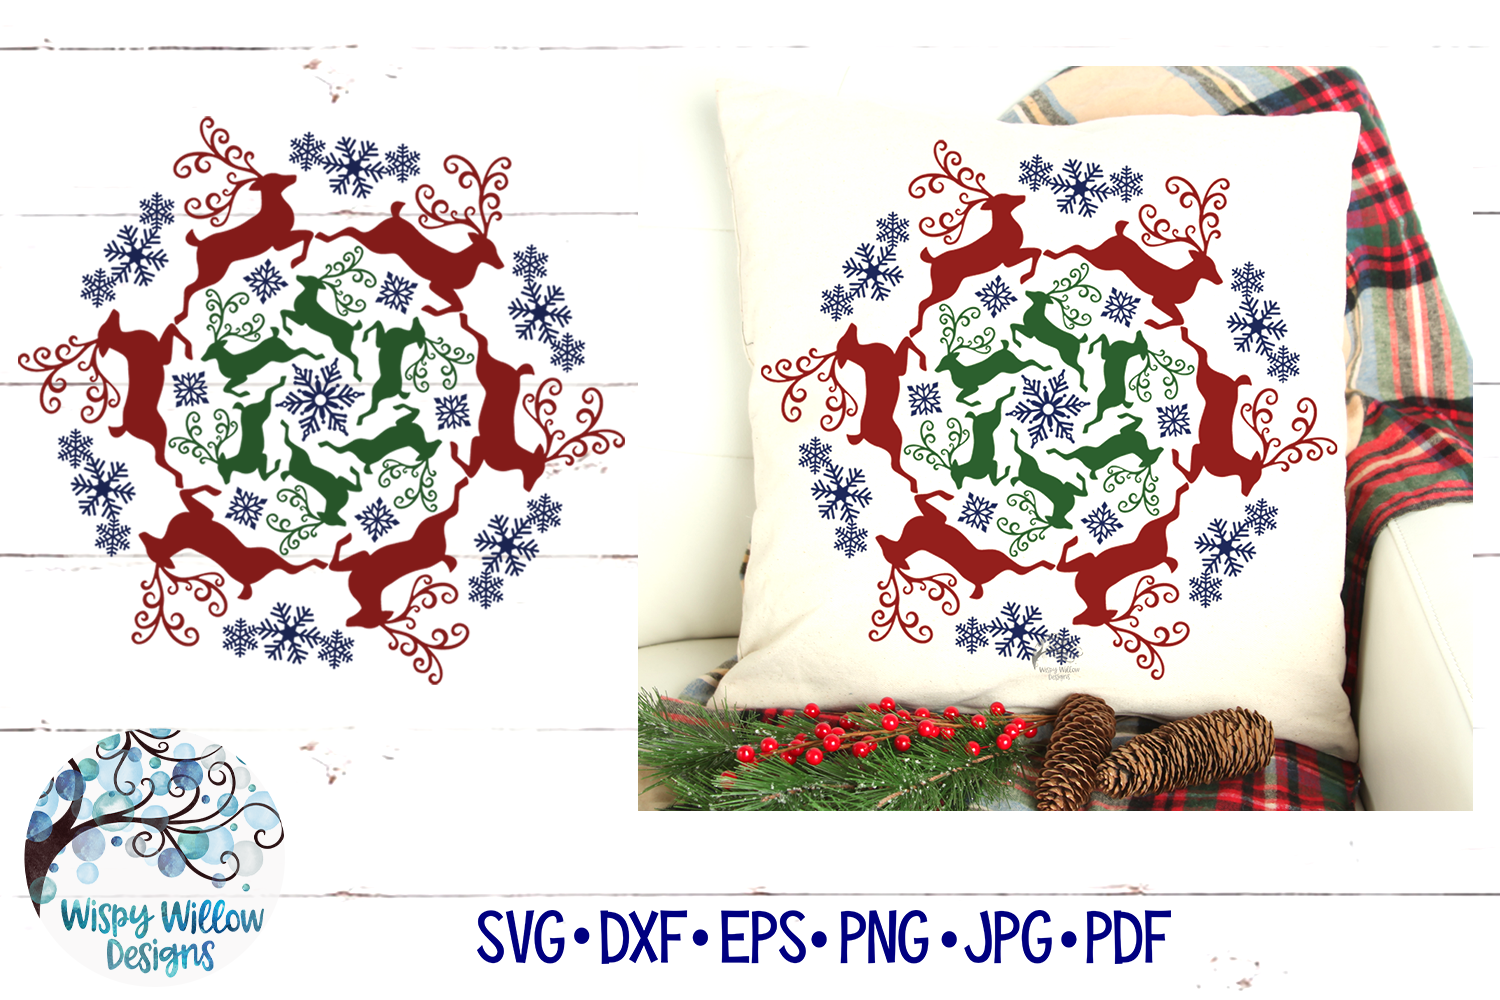 Download Christmas 3D Mandala Svg Free - Free SVG Cut File - Best ...